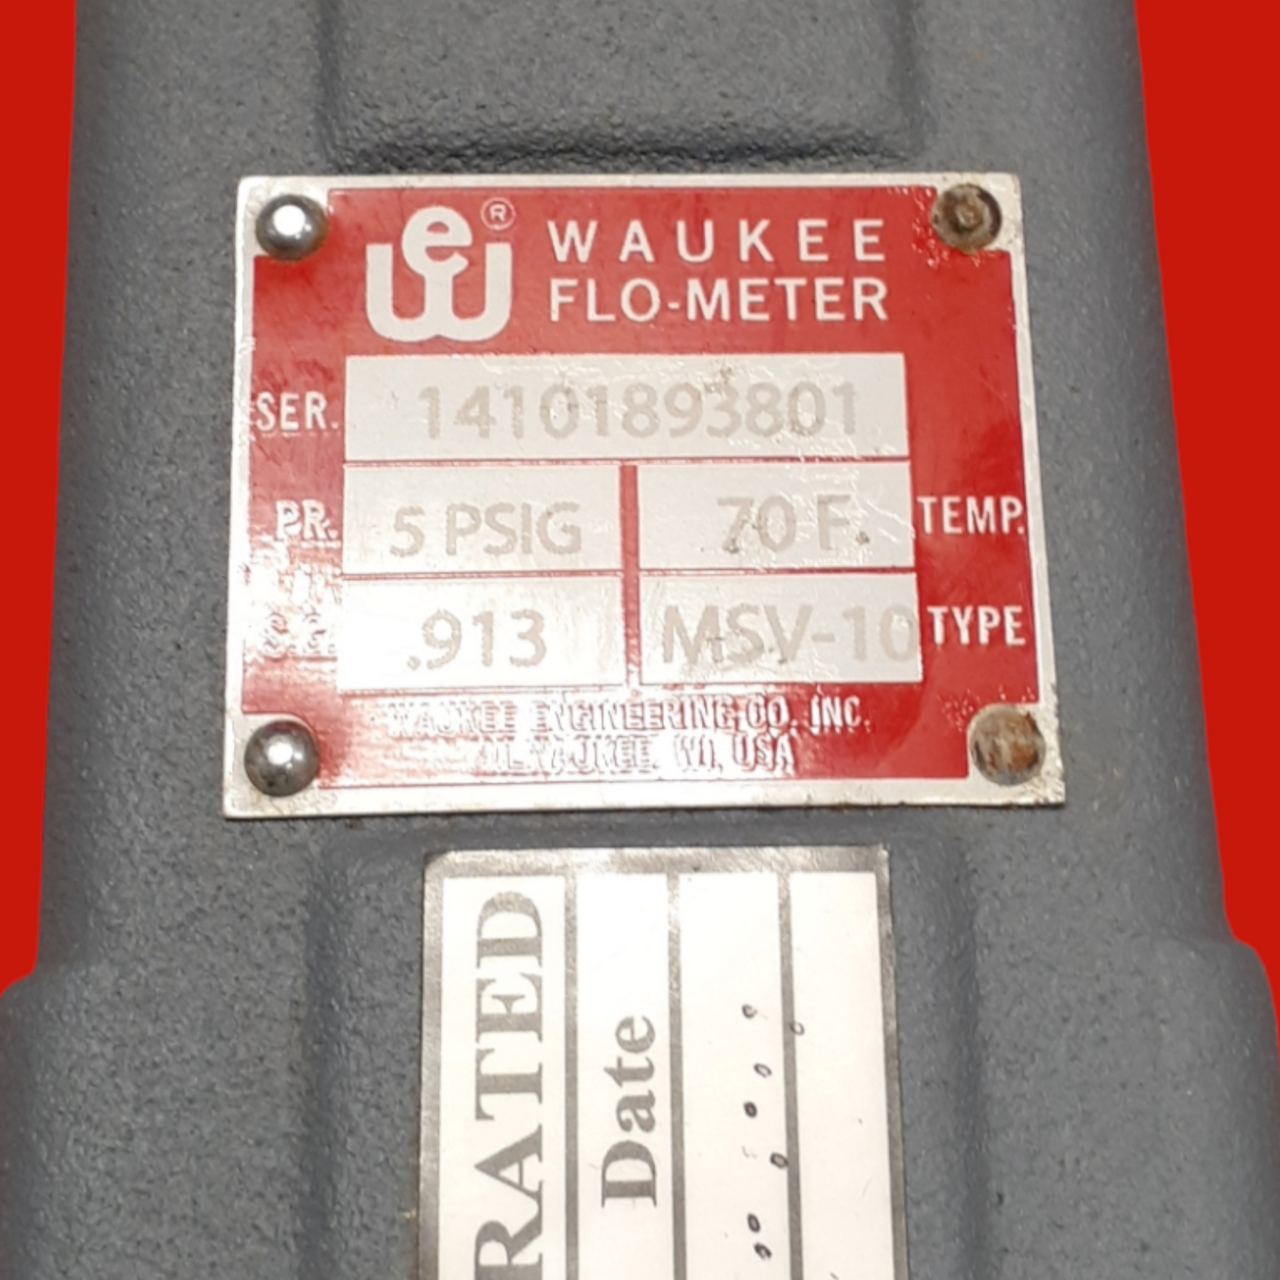 Waukee MSV-10 95% Nitrogen 5% Hydrogen Flo-Meter